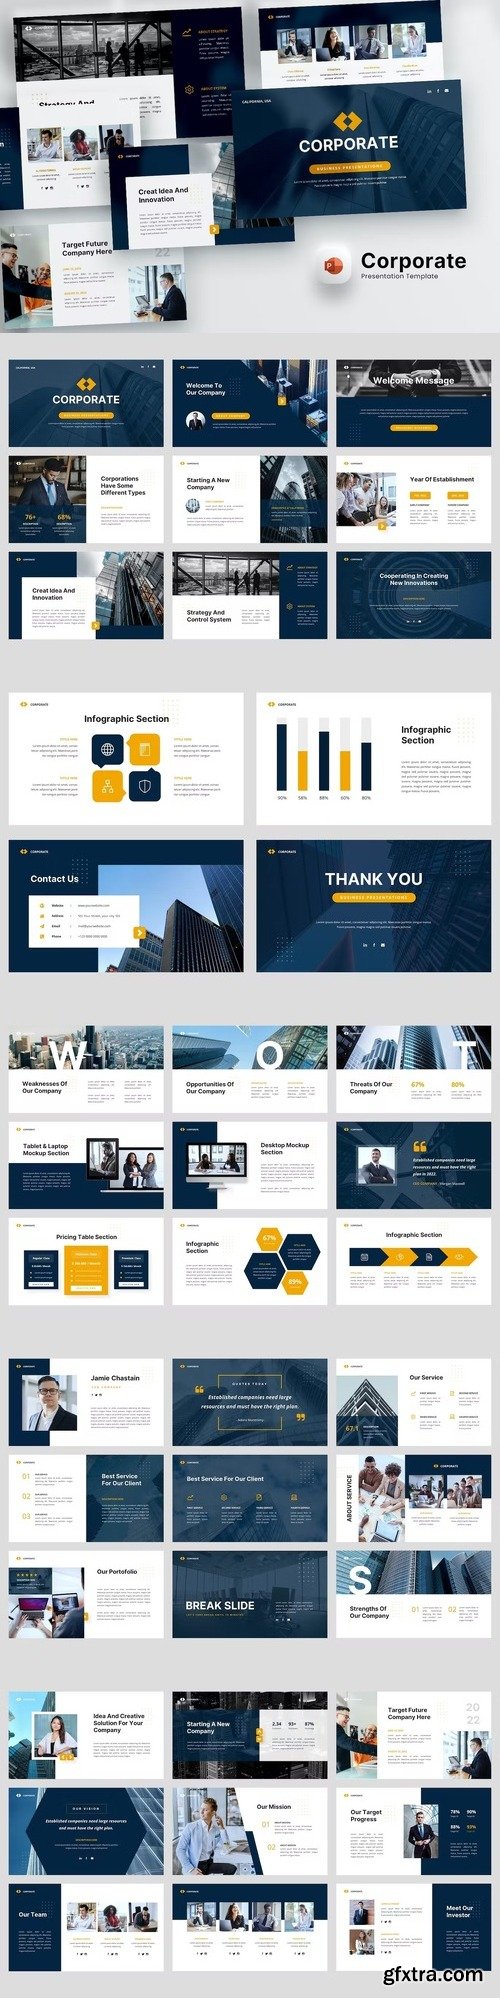 Corporate - Company Profile Powerpoint Template BJK7QGZ